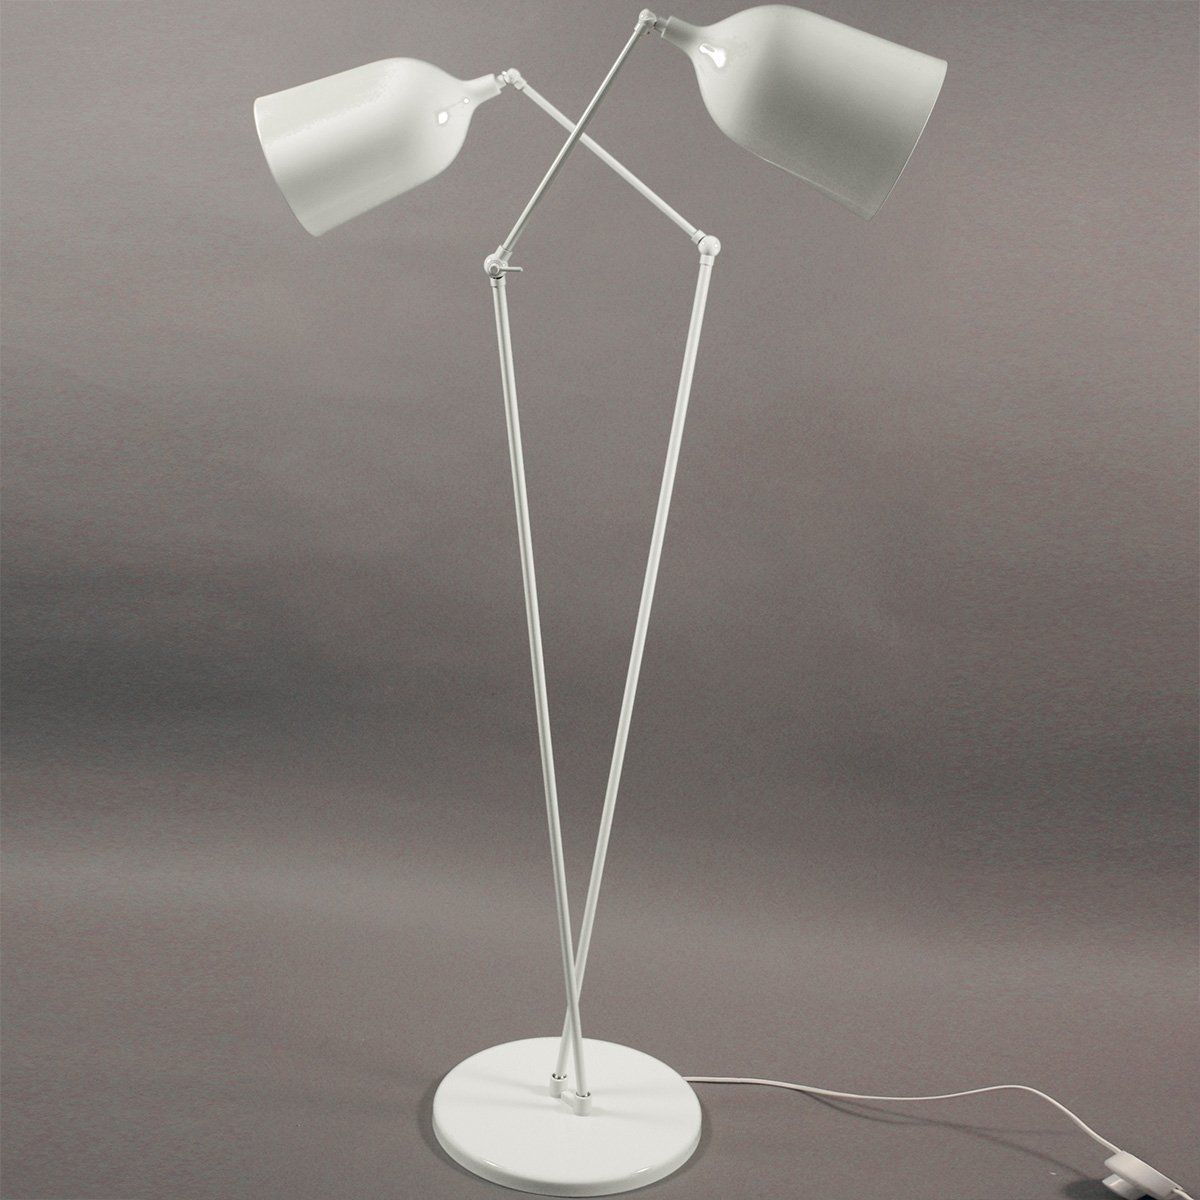 Lampadaire design TWIN blanc en métal